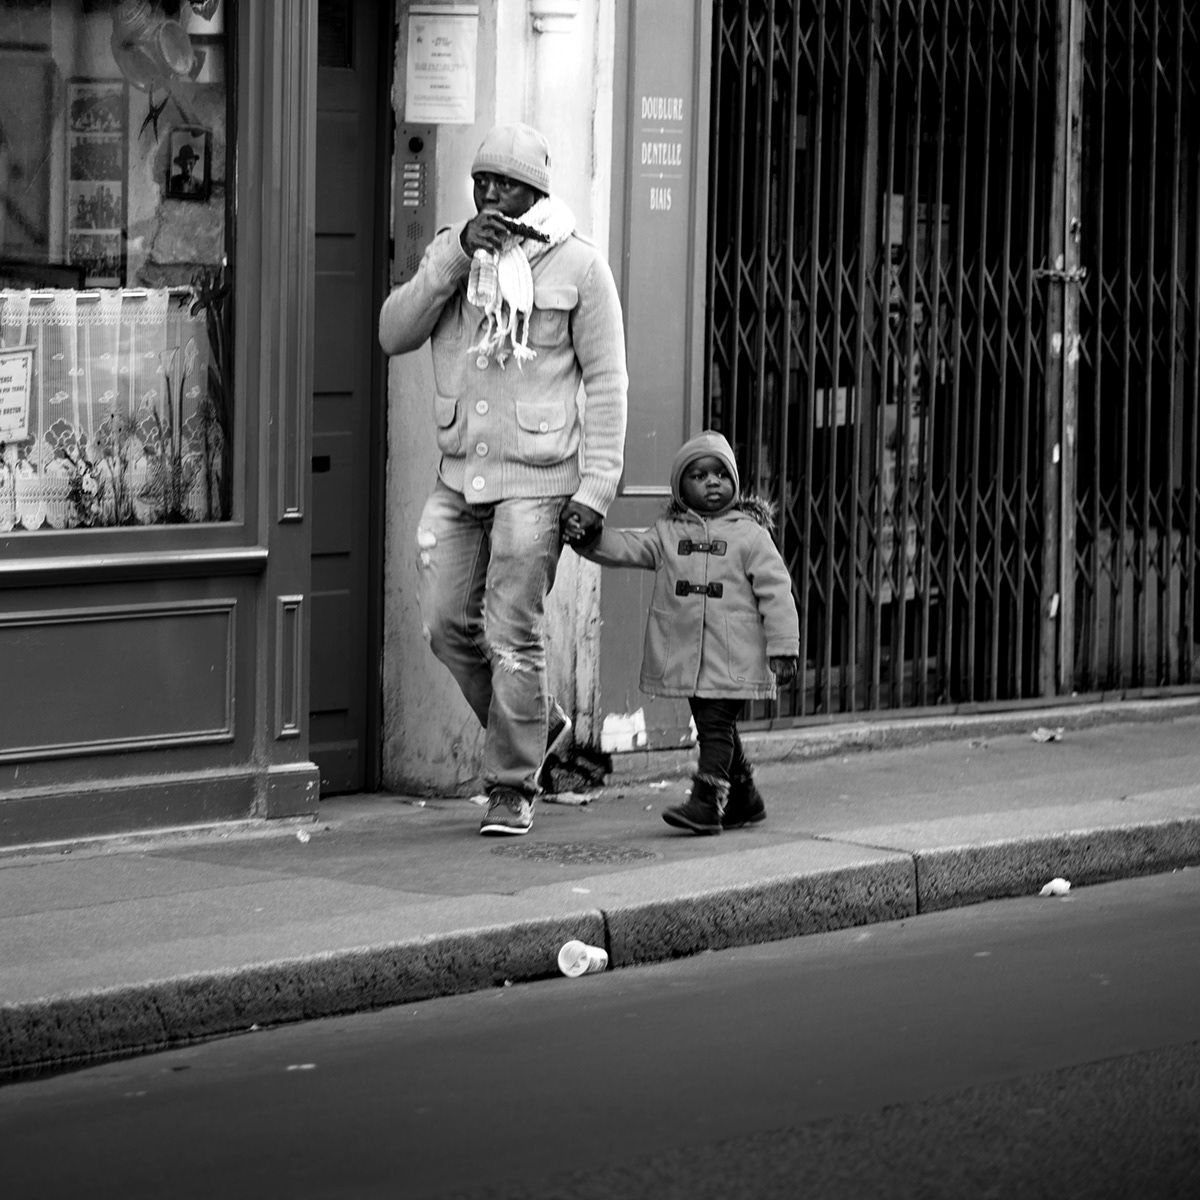 Paris  rue de charonne  street life  people   neighbourhood Documentary  black and white square format